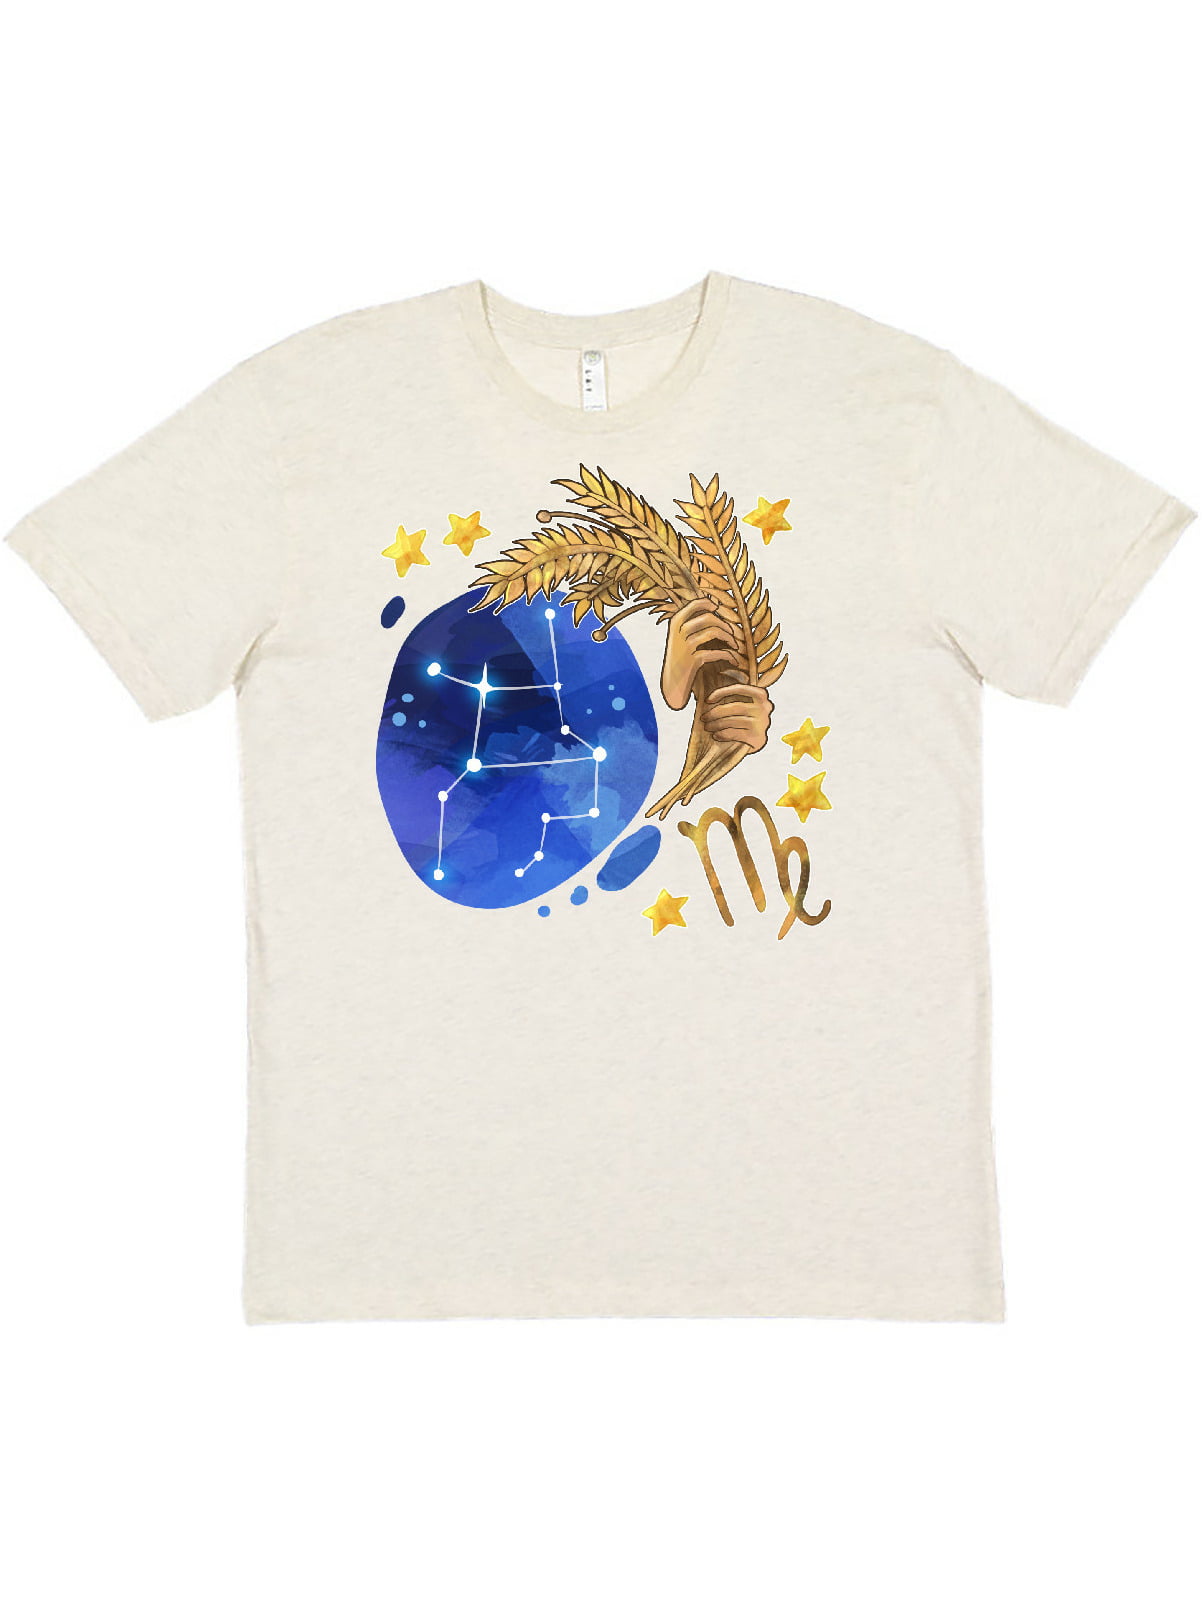 Virgo Virgo Zodiac Shirts Virgo Astrology Gift for Virgo, Virgo Shirt Virgo Birthday Gift Zodiac Sign Constellations Classic T-Shirt